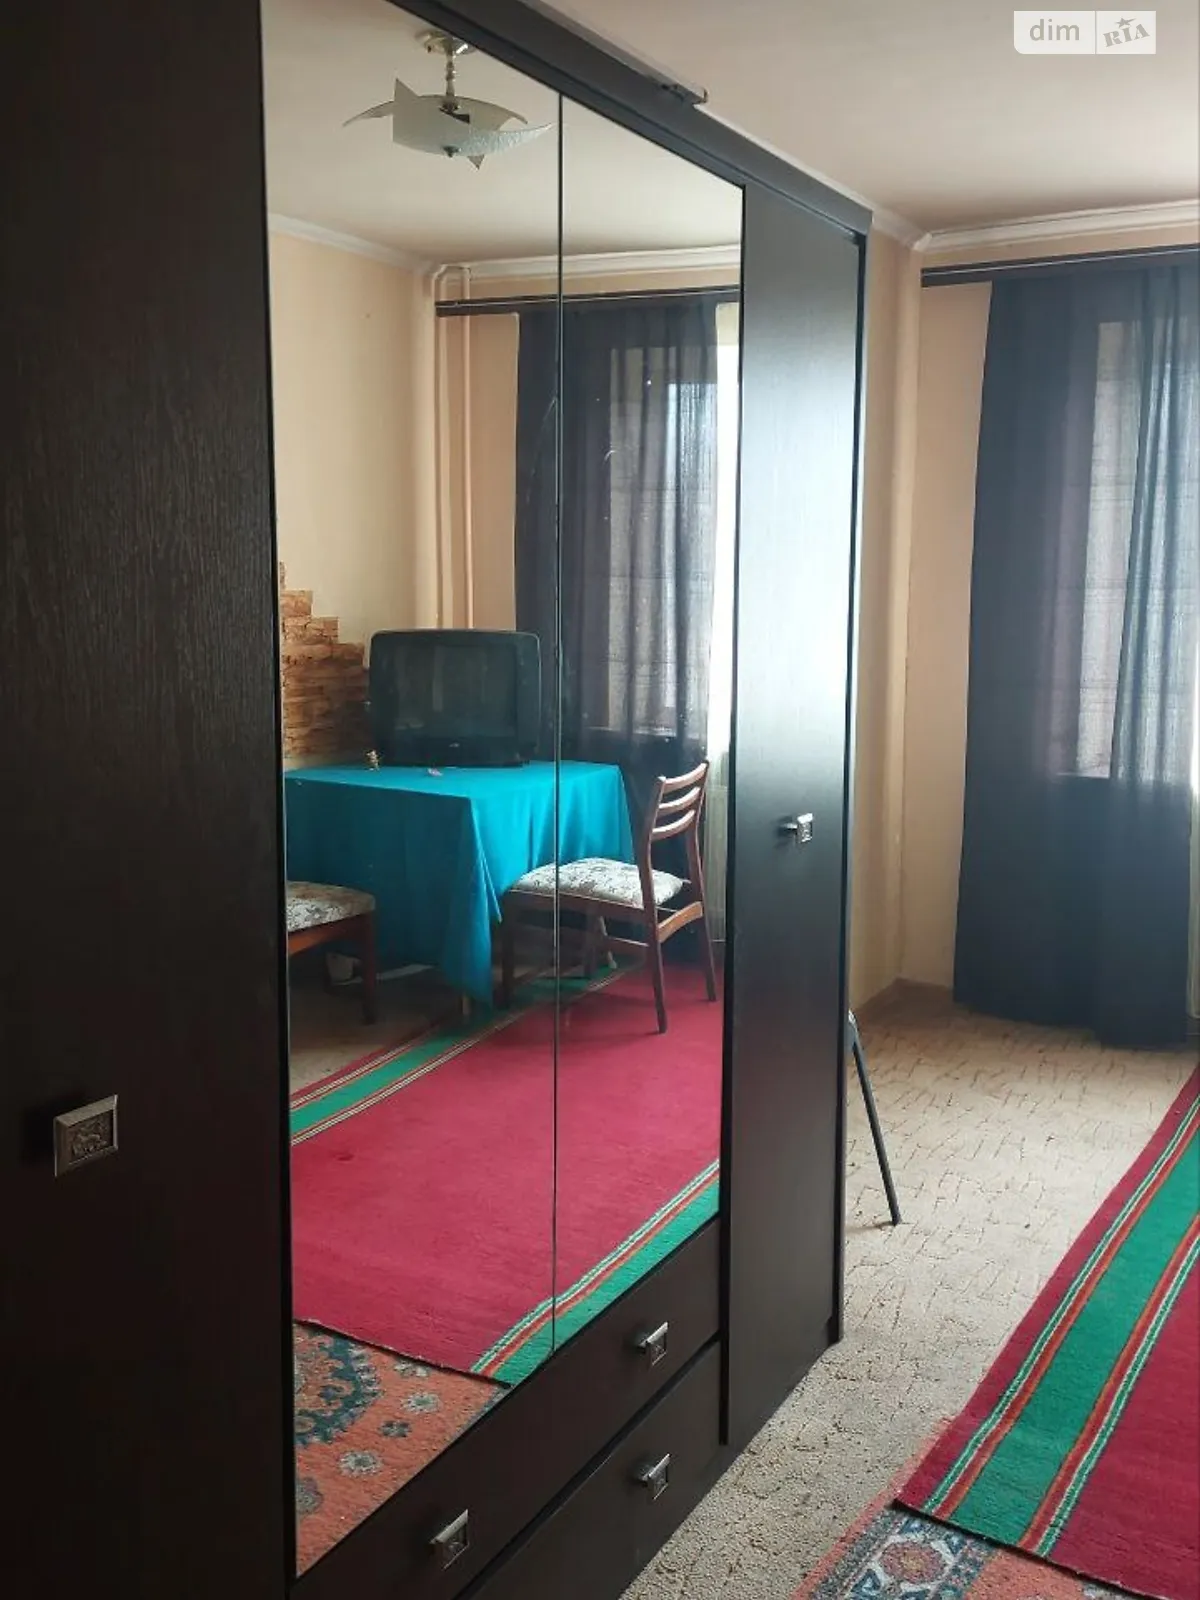 Продается комната 17 кв. м в Одессе, цена: 9800 $ - фото 1